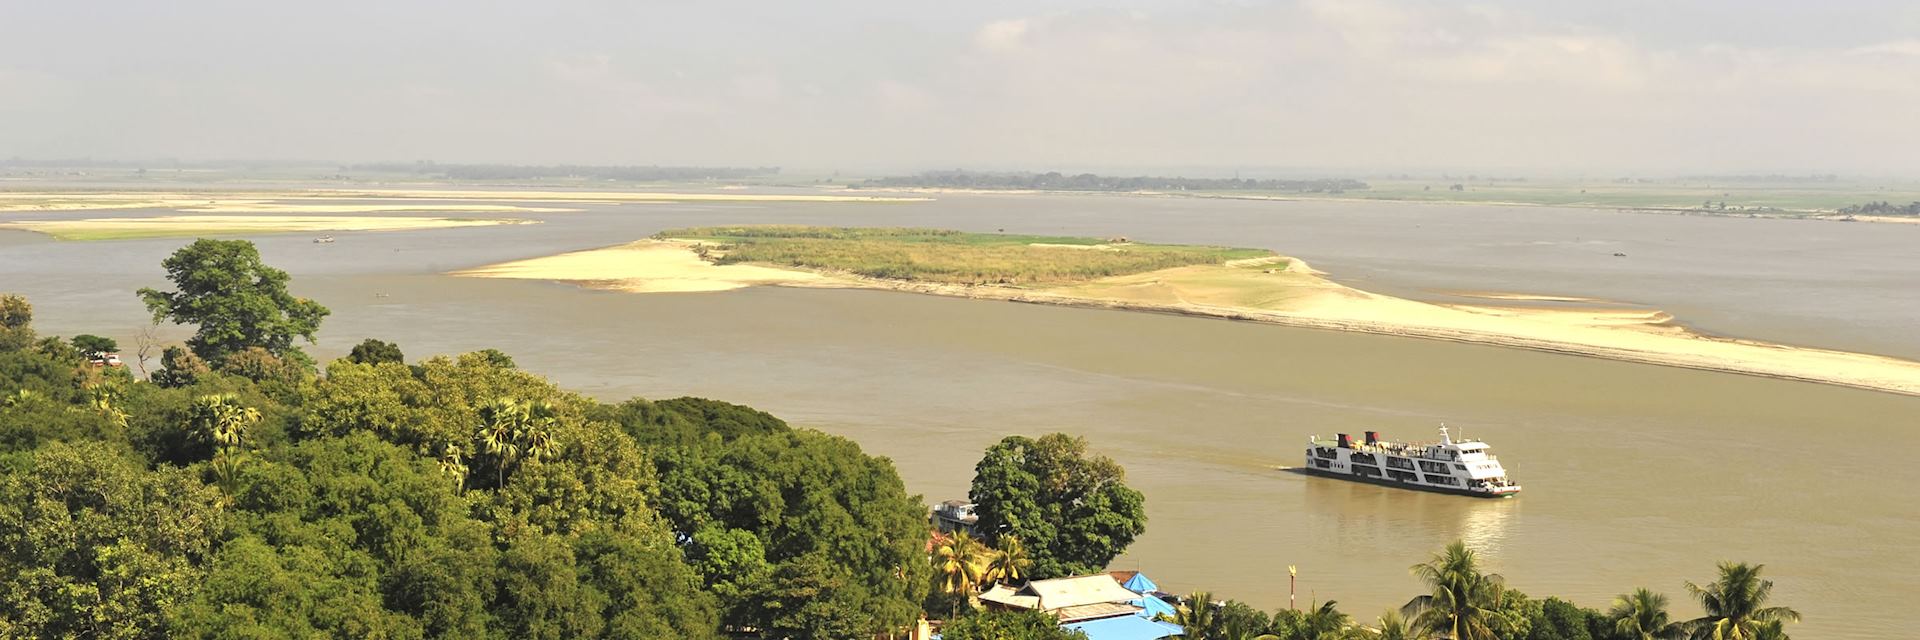 The Ayeyarwady River in Myanmar